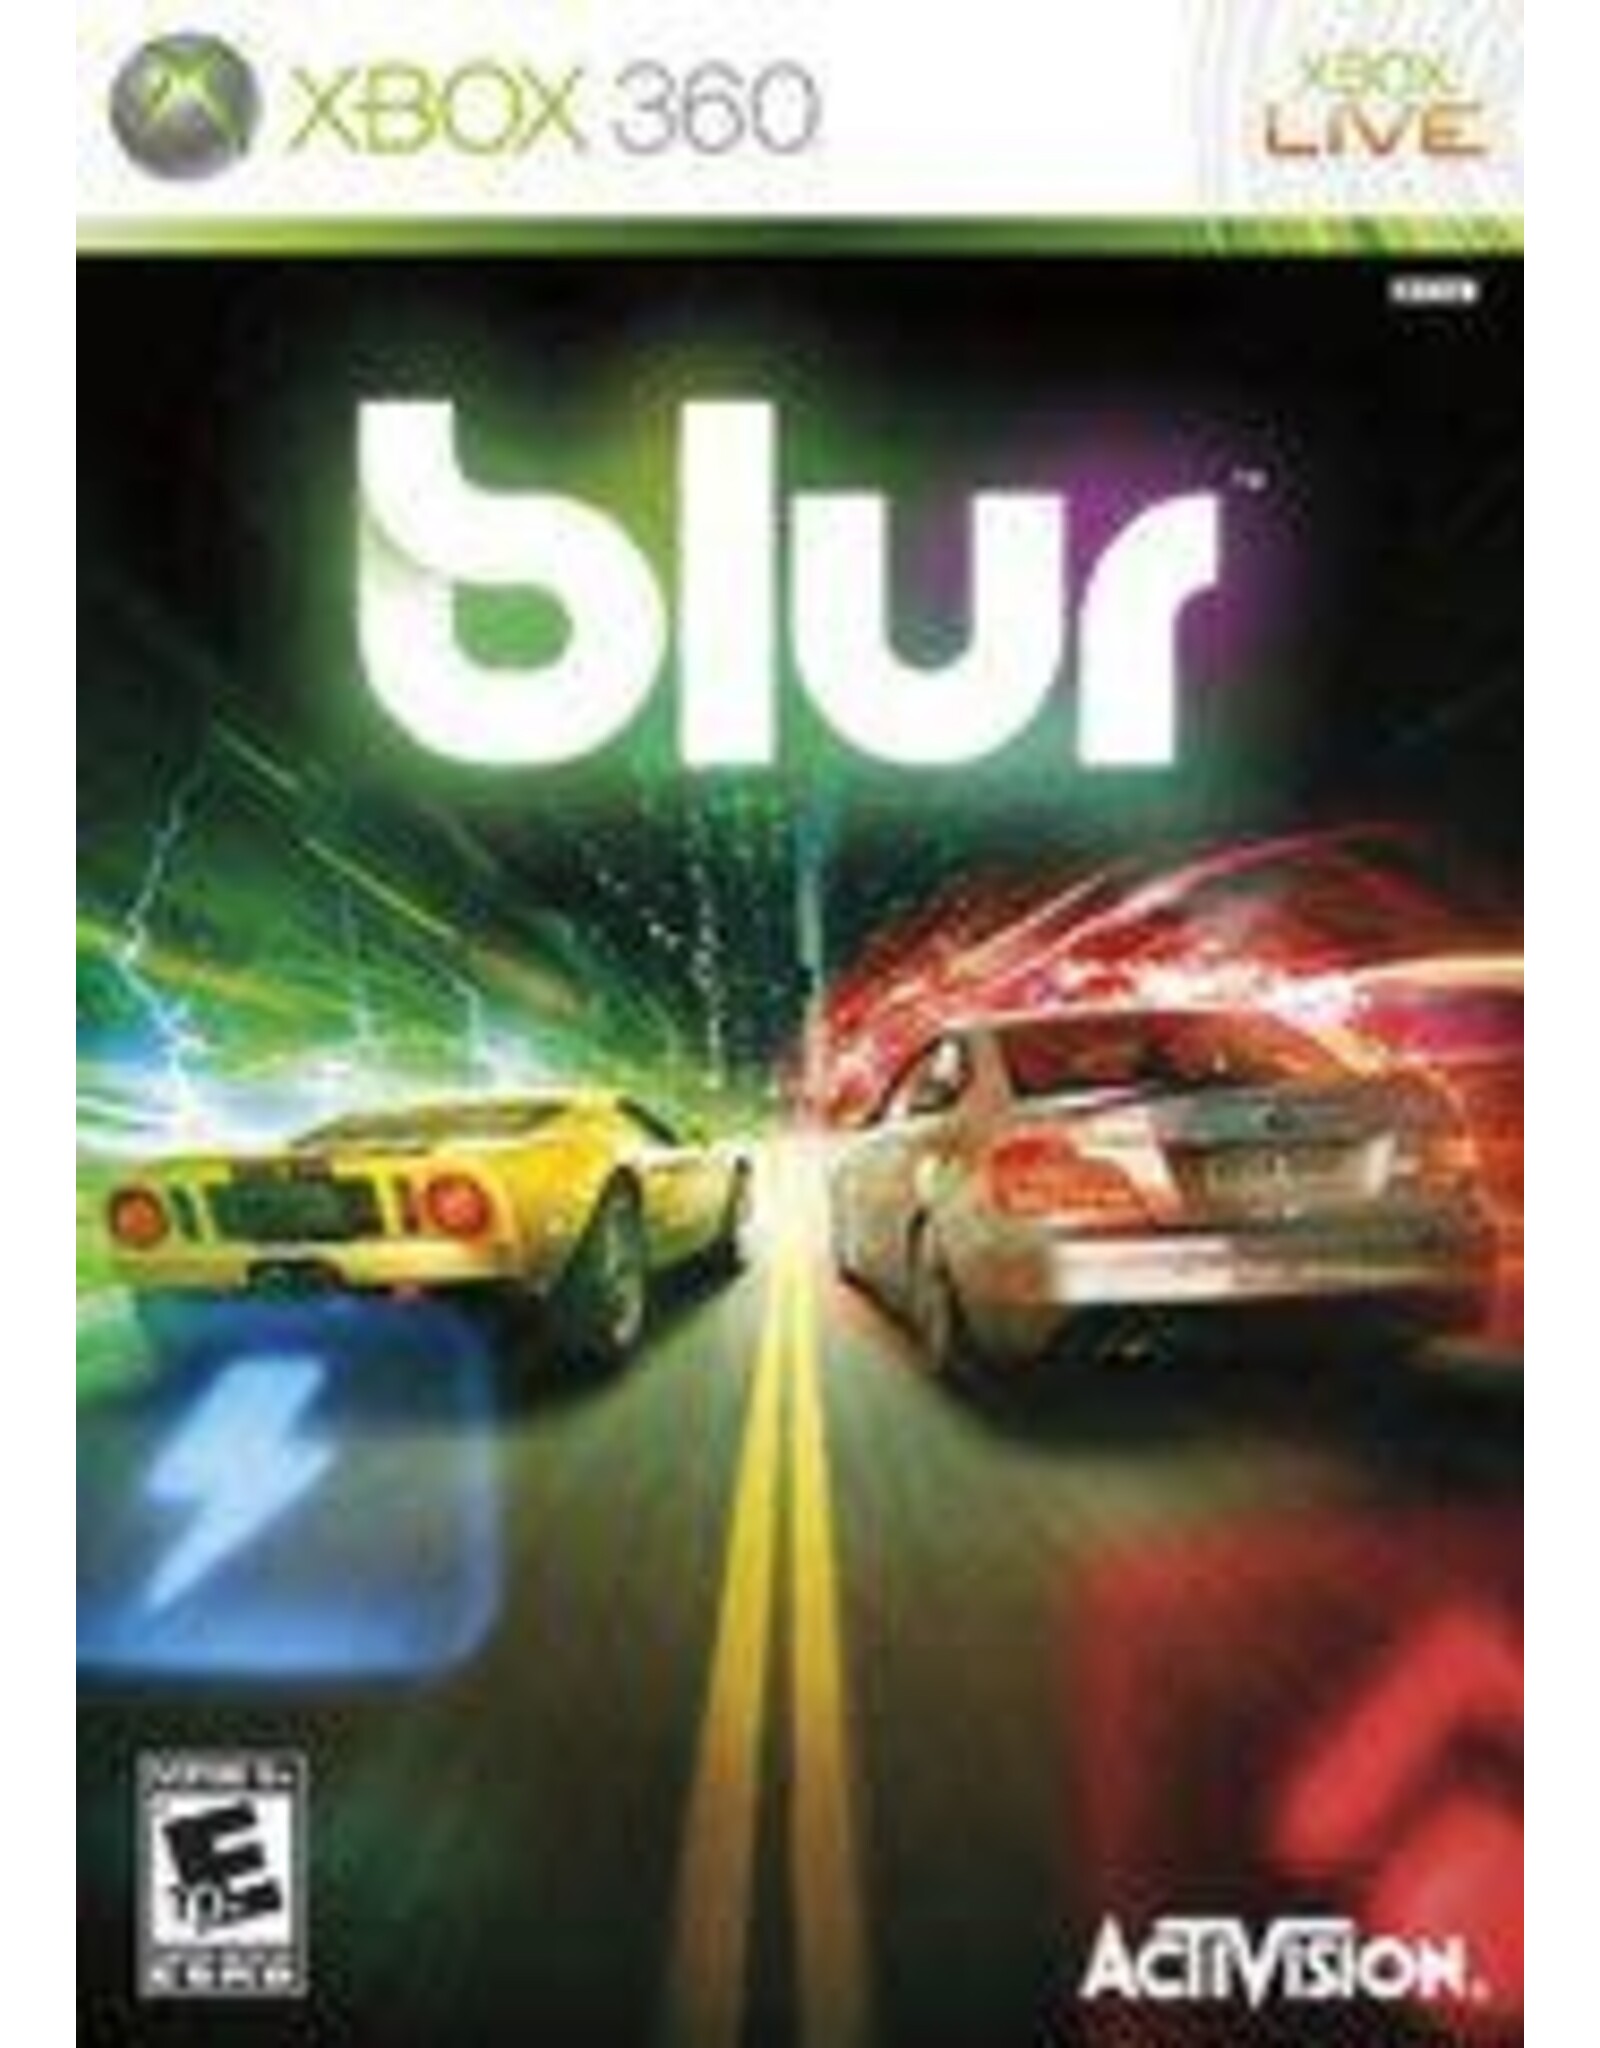 Xbox 360 Blur (CiB)